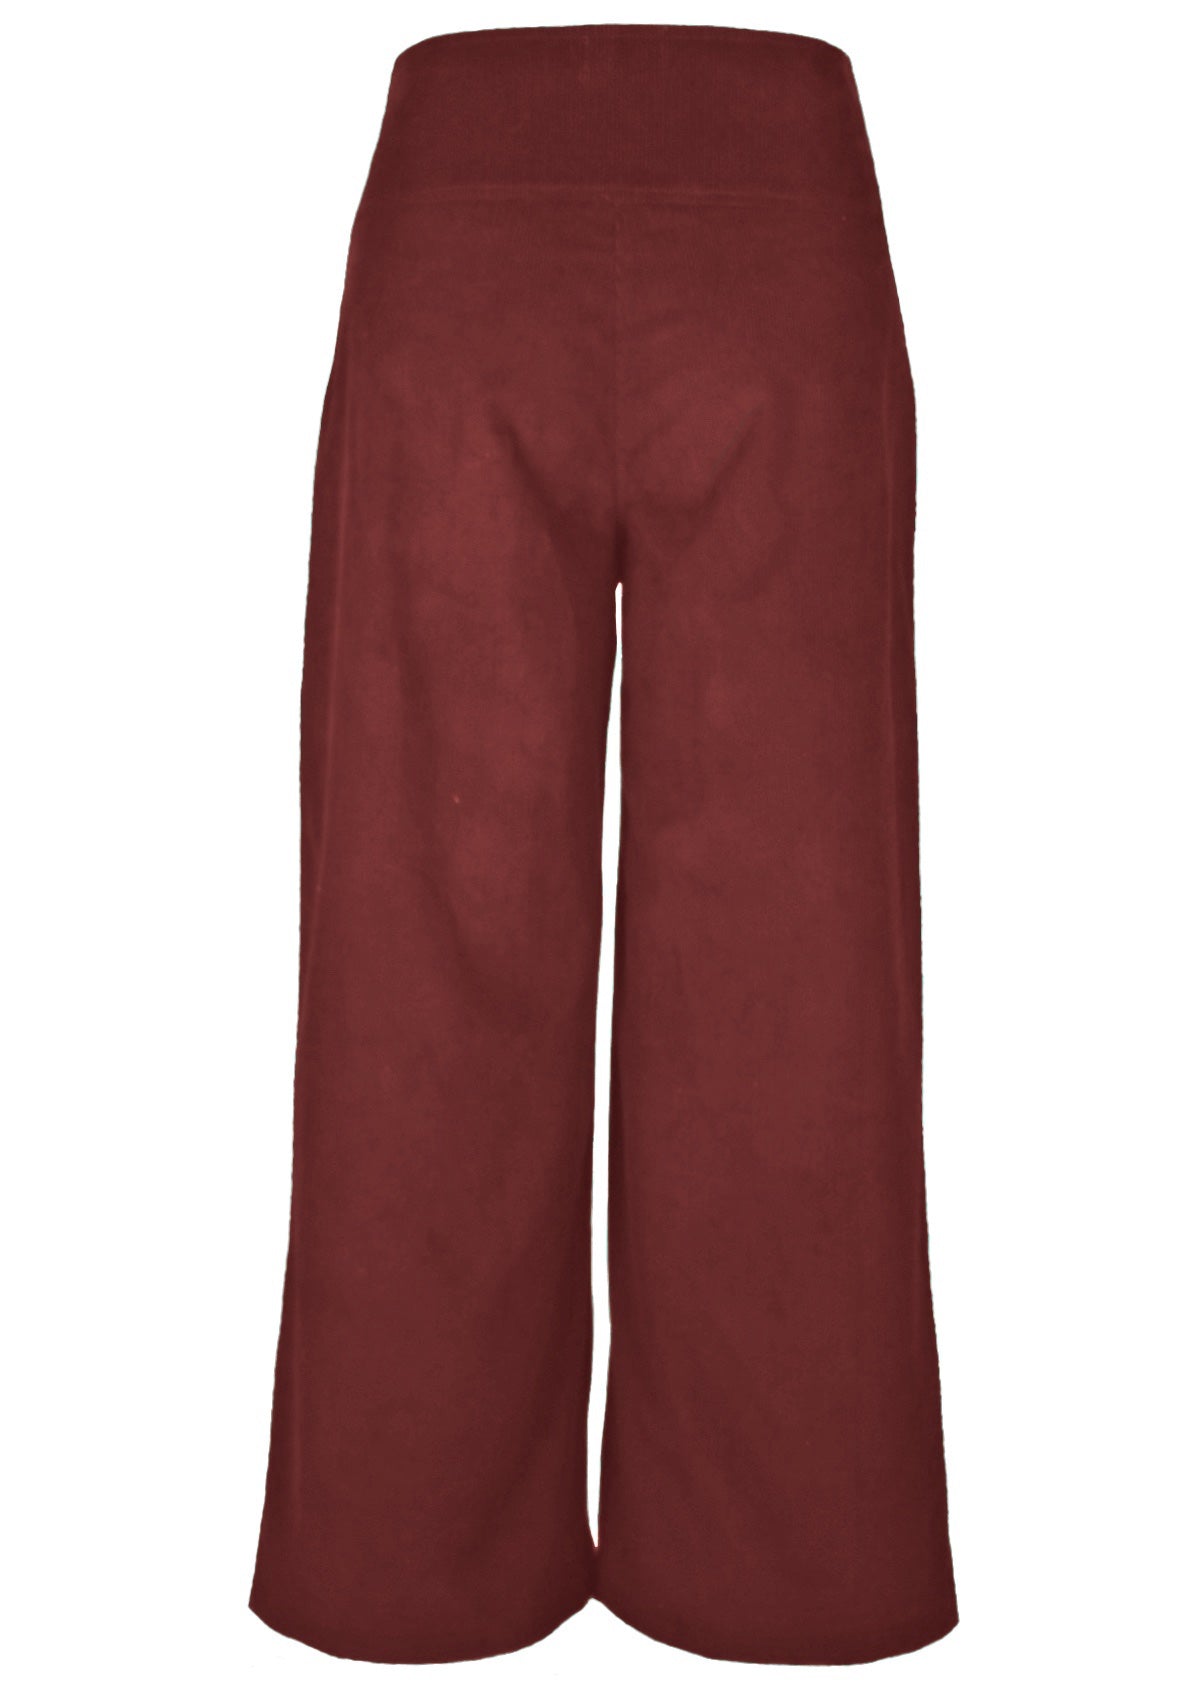 Deep red zinfandel 100% cotton corduroy pants.